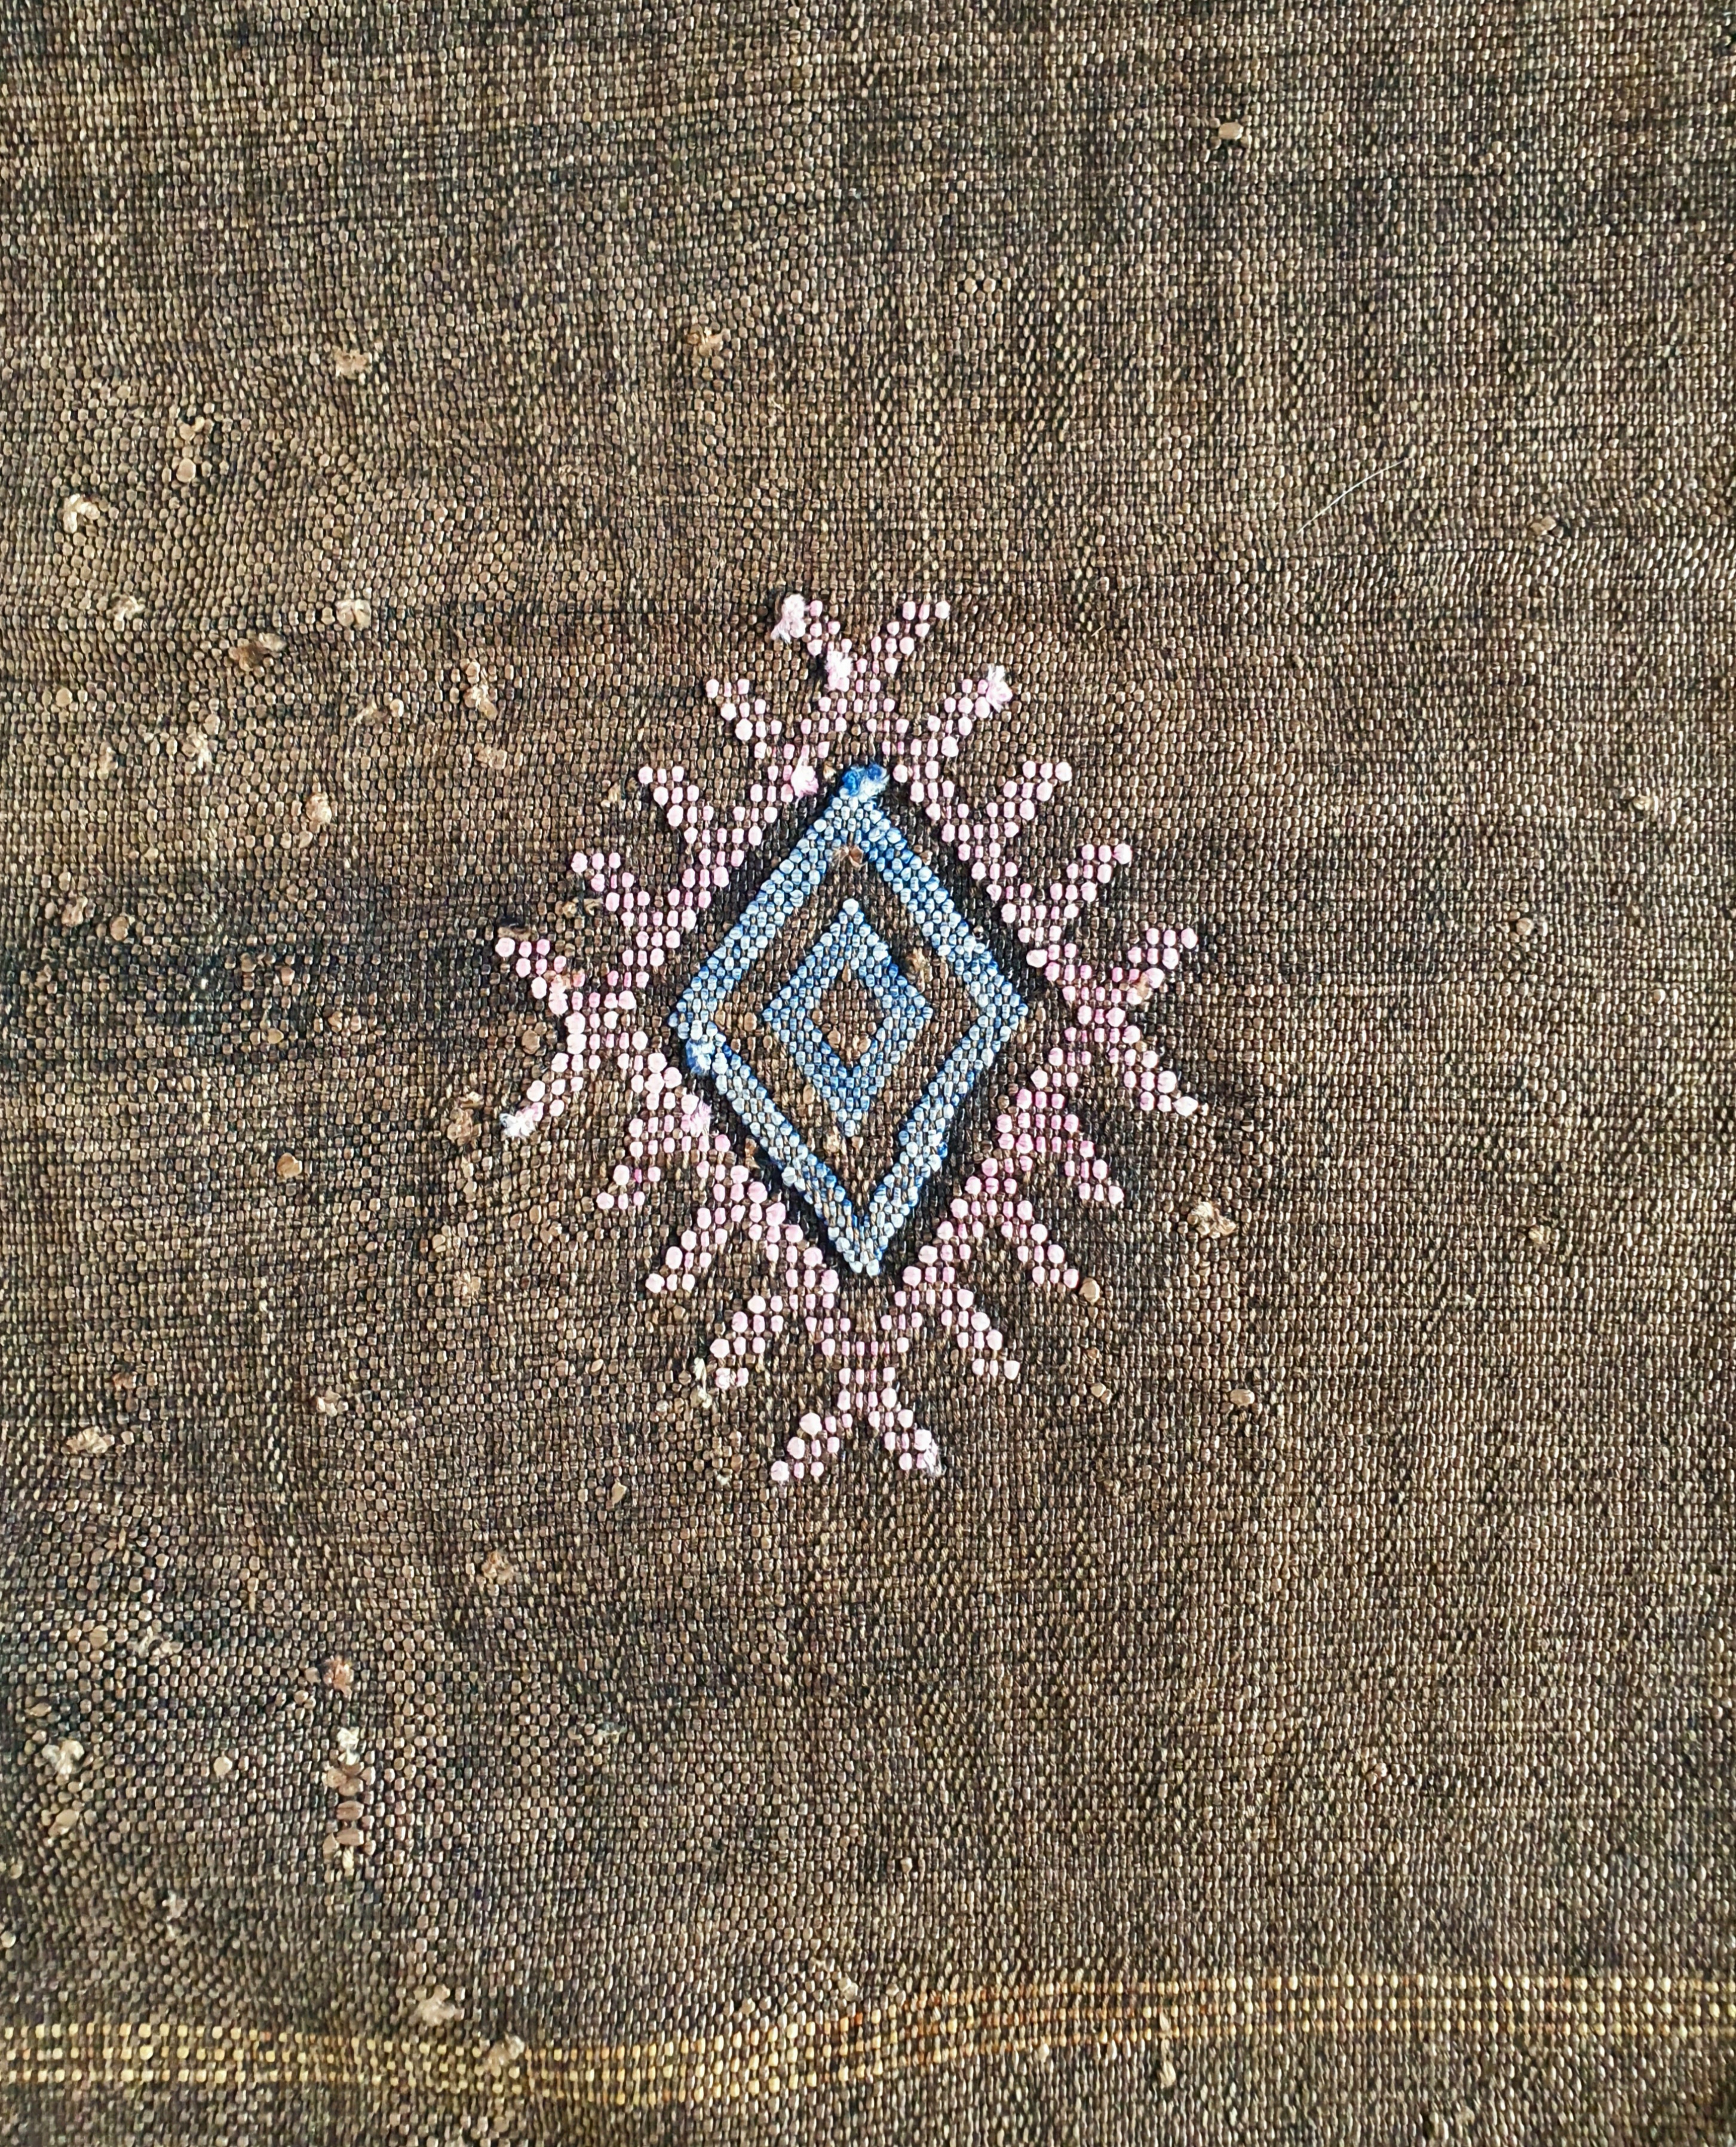 Moroccan kilim carpet